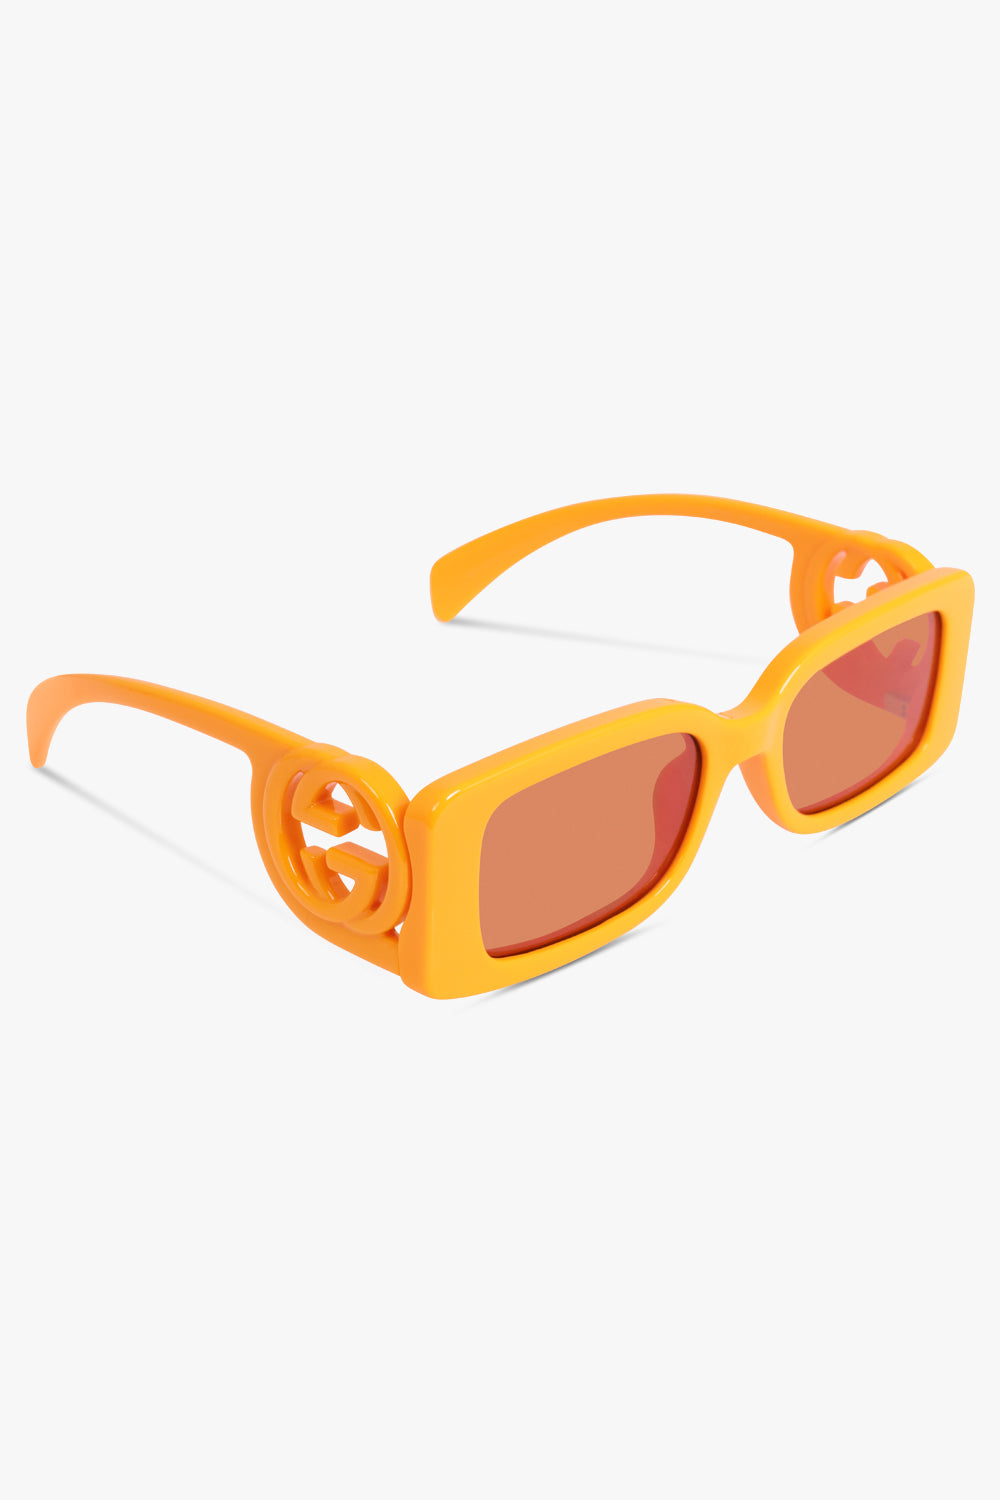 GUCCI ACCESSORIES ORANGE / ORANGE GG1325S 54 Rectangle Frame Side Logo Sunglasses | Orange